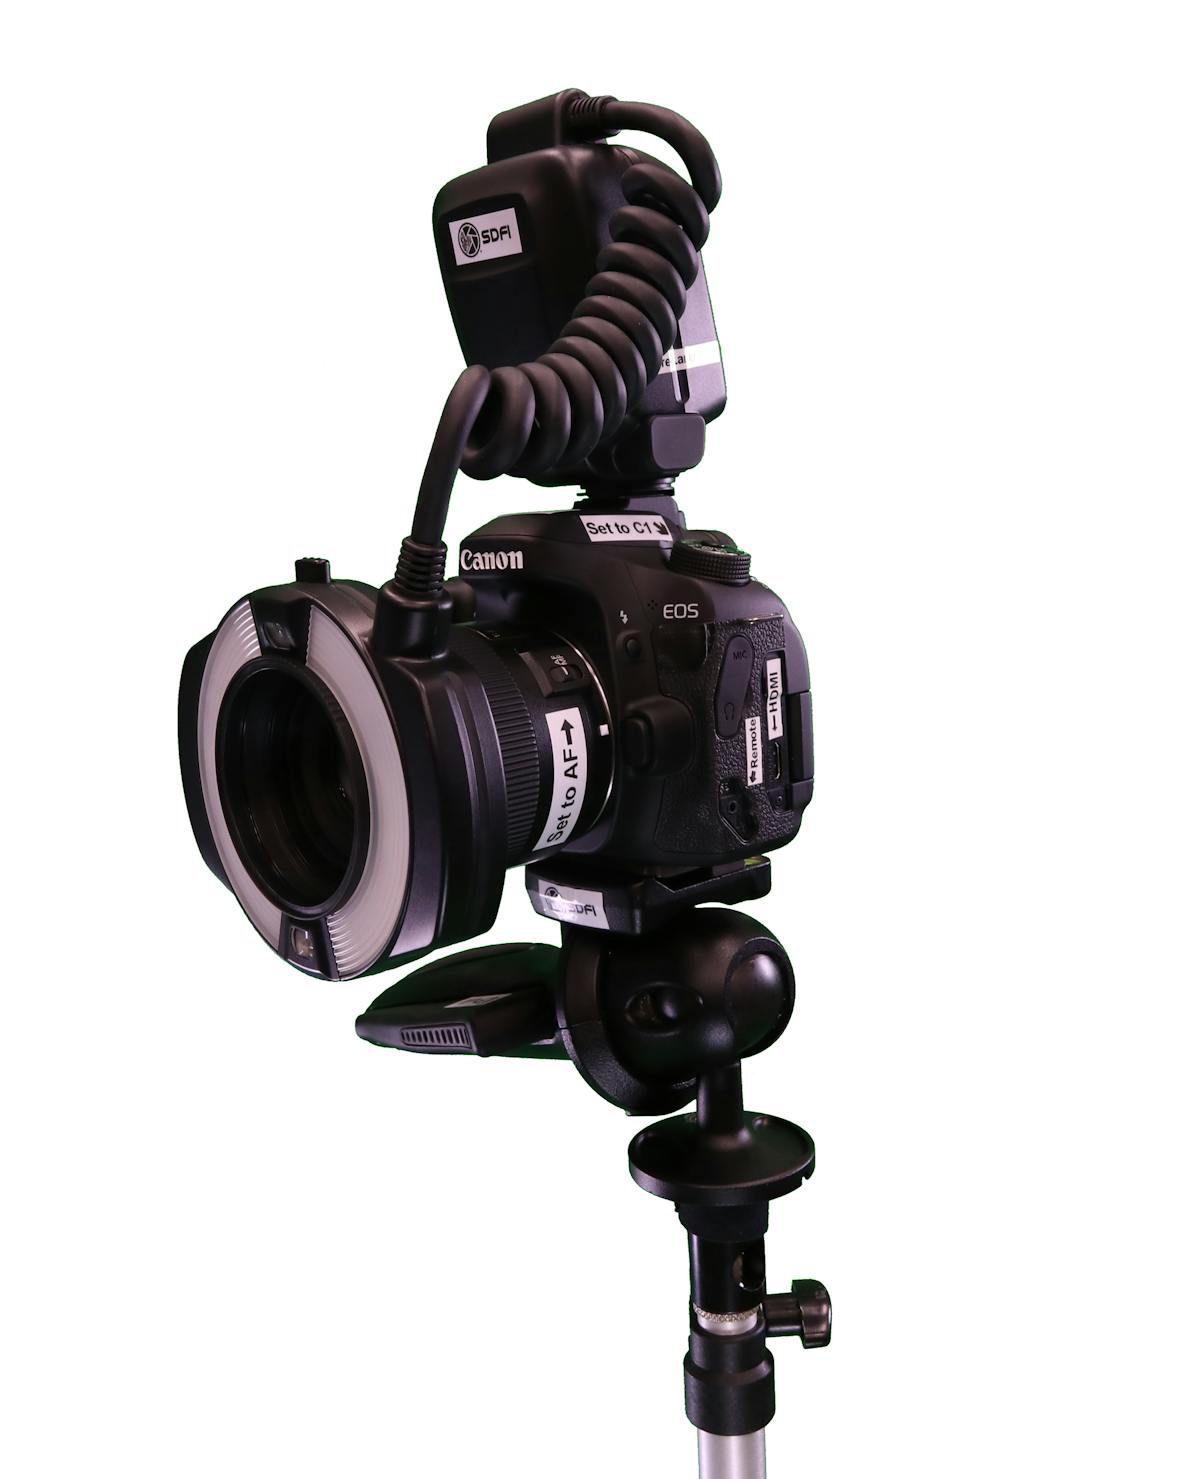 SDFI Camera with ring flash